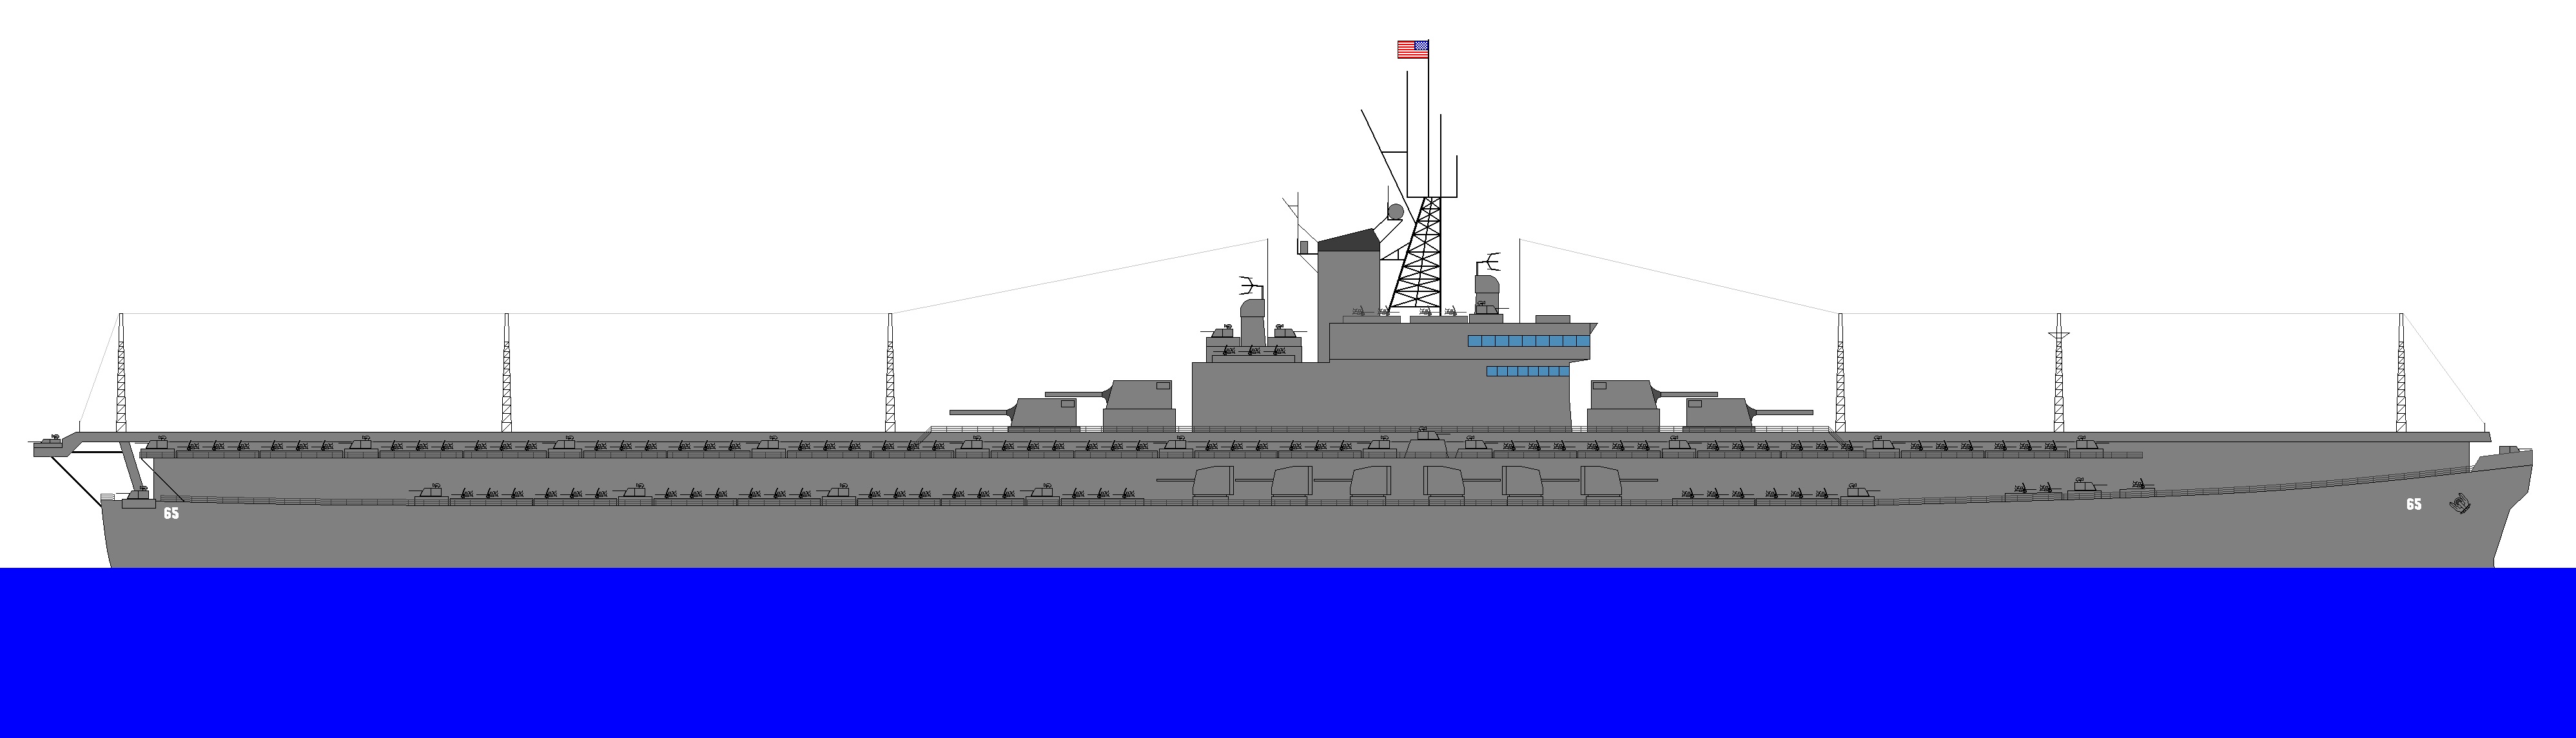 Iowa II Class Heavy Carrier Badarnold 2.jpg